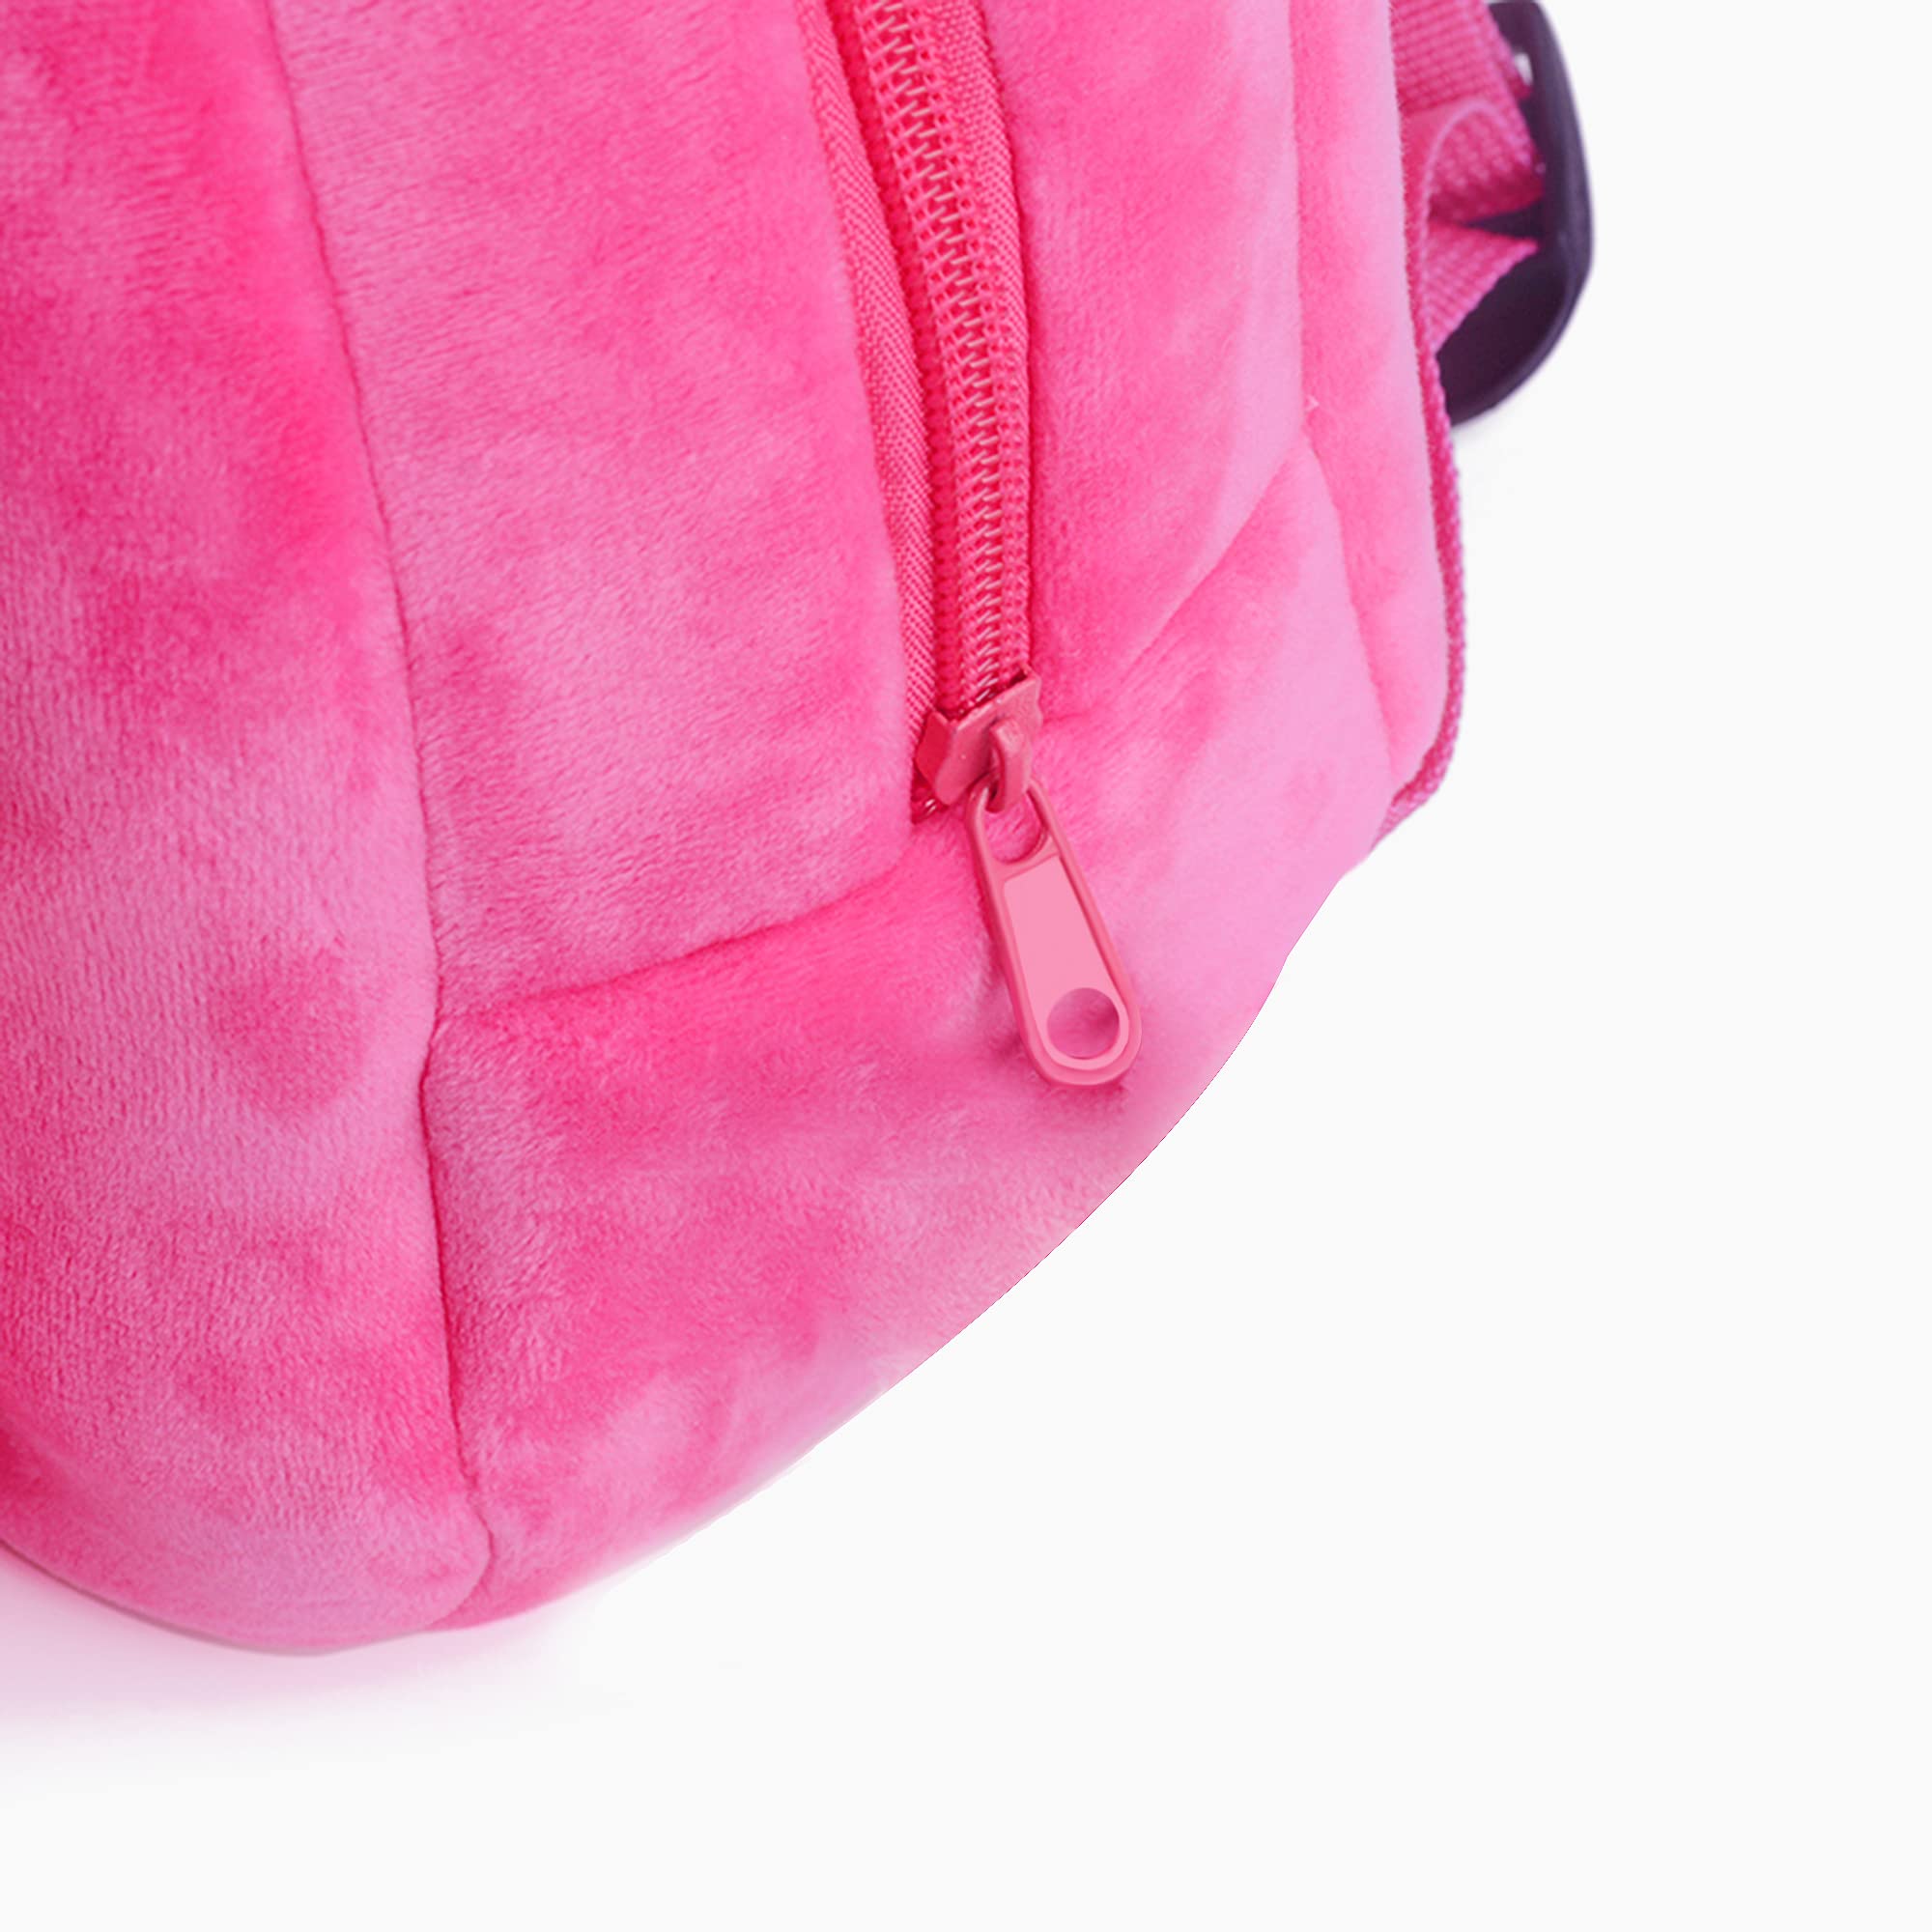 Gloveleya Kids Backpack Plush Backpacks Toddler Backpacks with Stuffed Bunny Toys Rose Red 9''